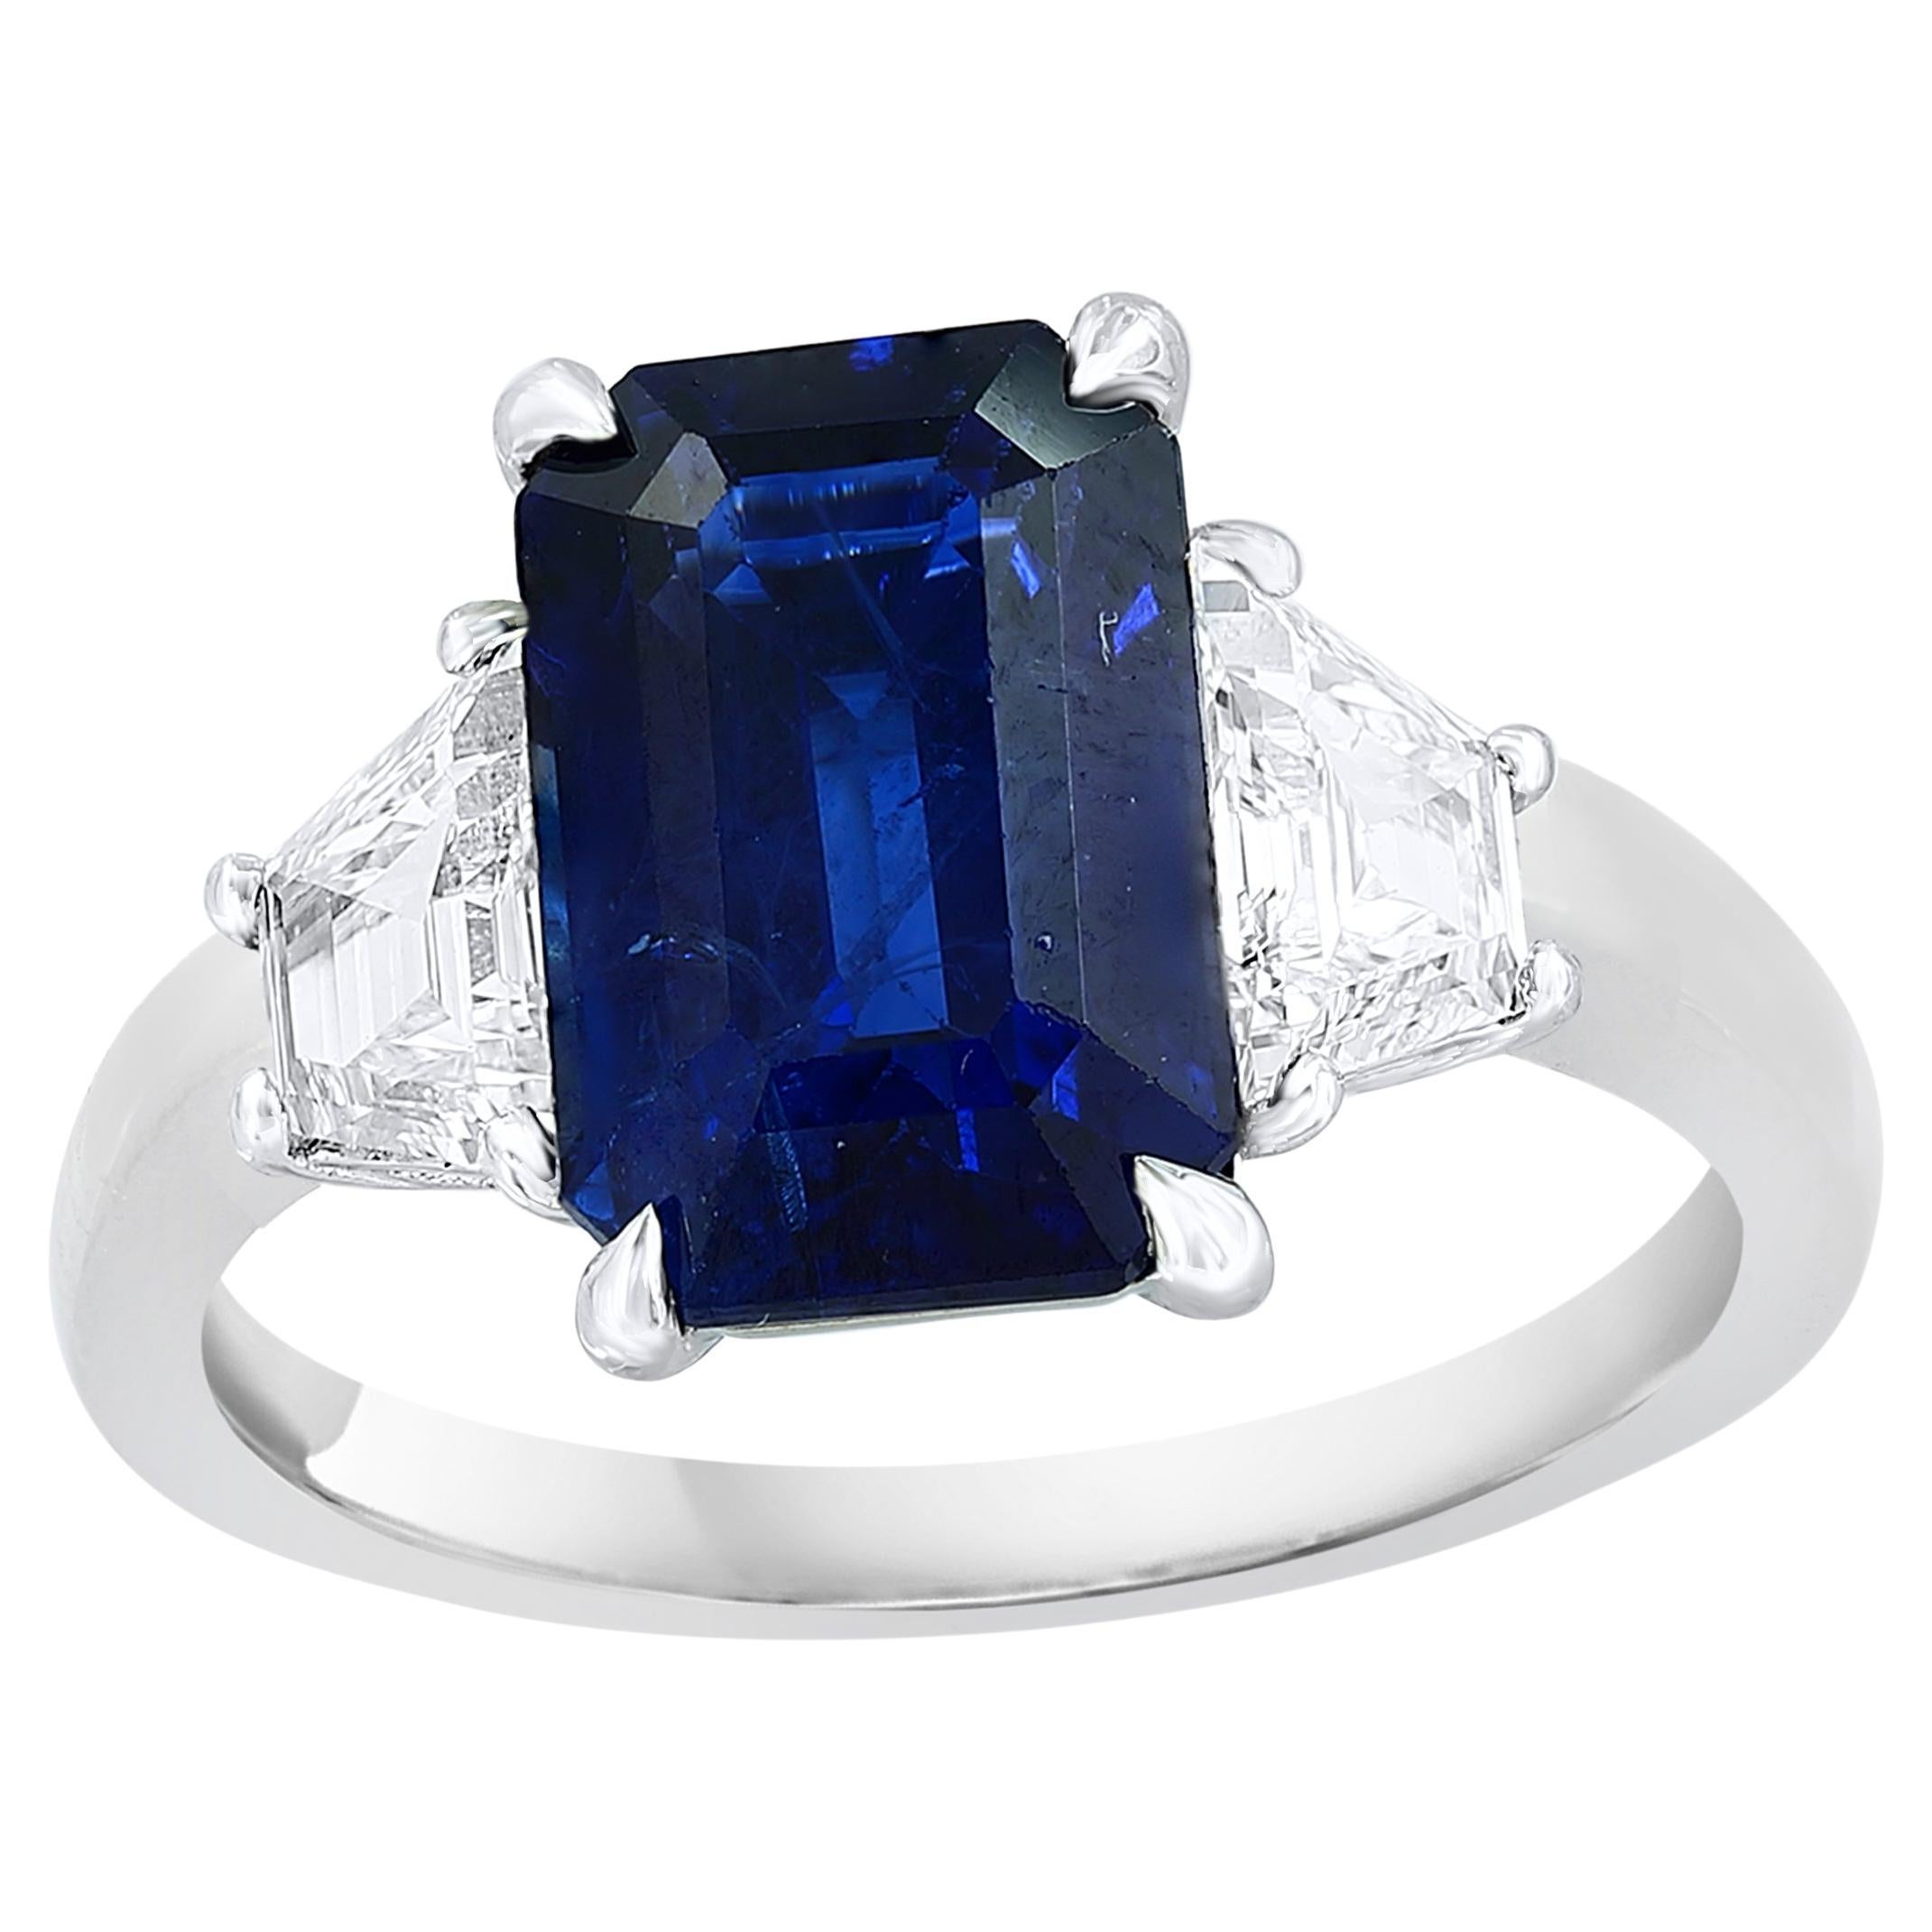 Certified 3.18 Carat Emerald Cut Sapphire & Diamond Engagement Ring in Platinum